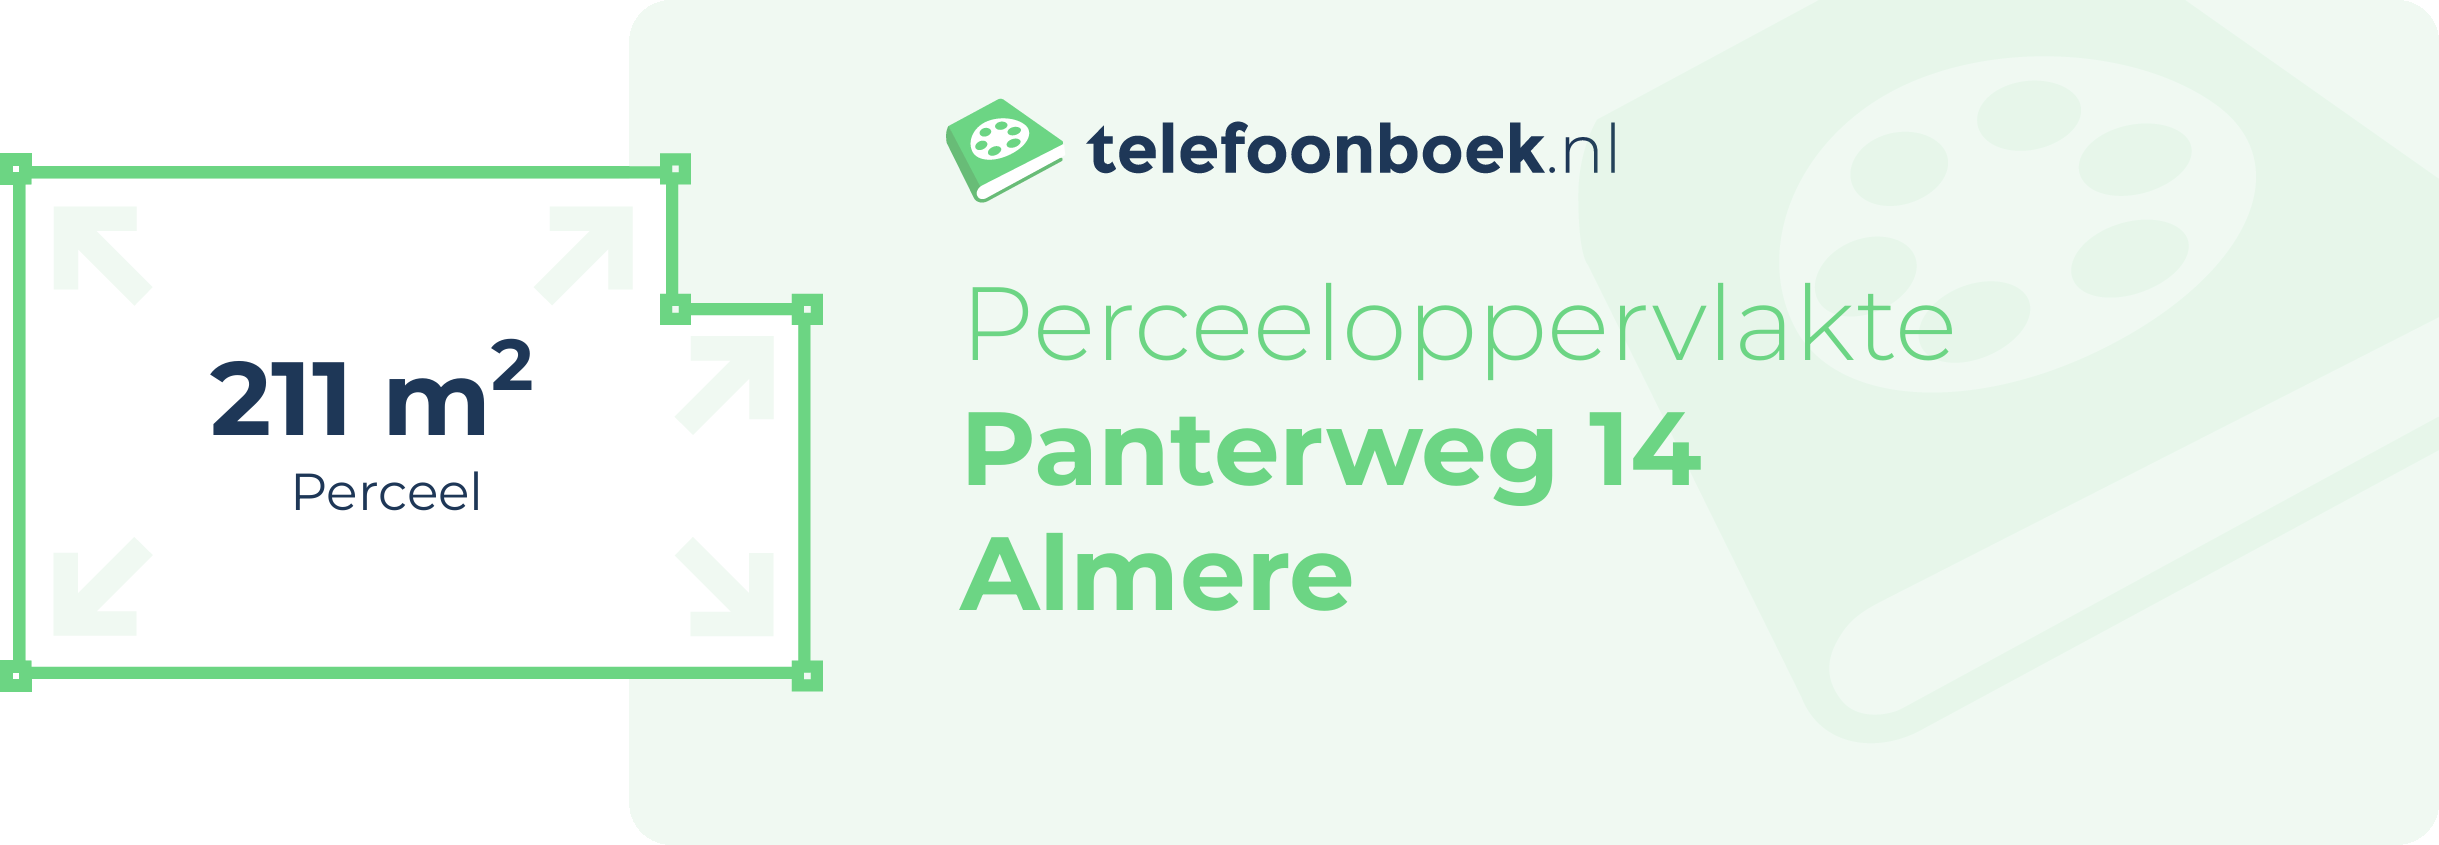 Perceeloppervlakte Panterweg 14 Almere